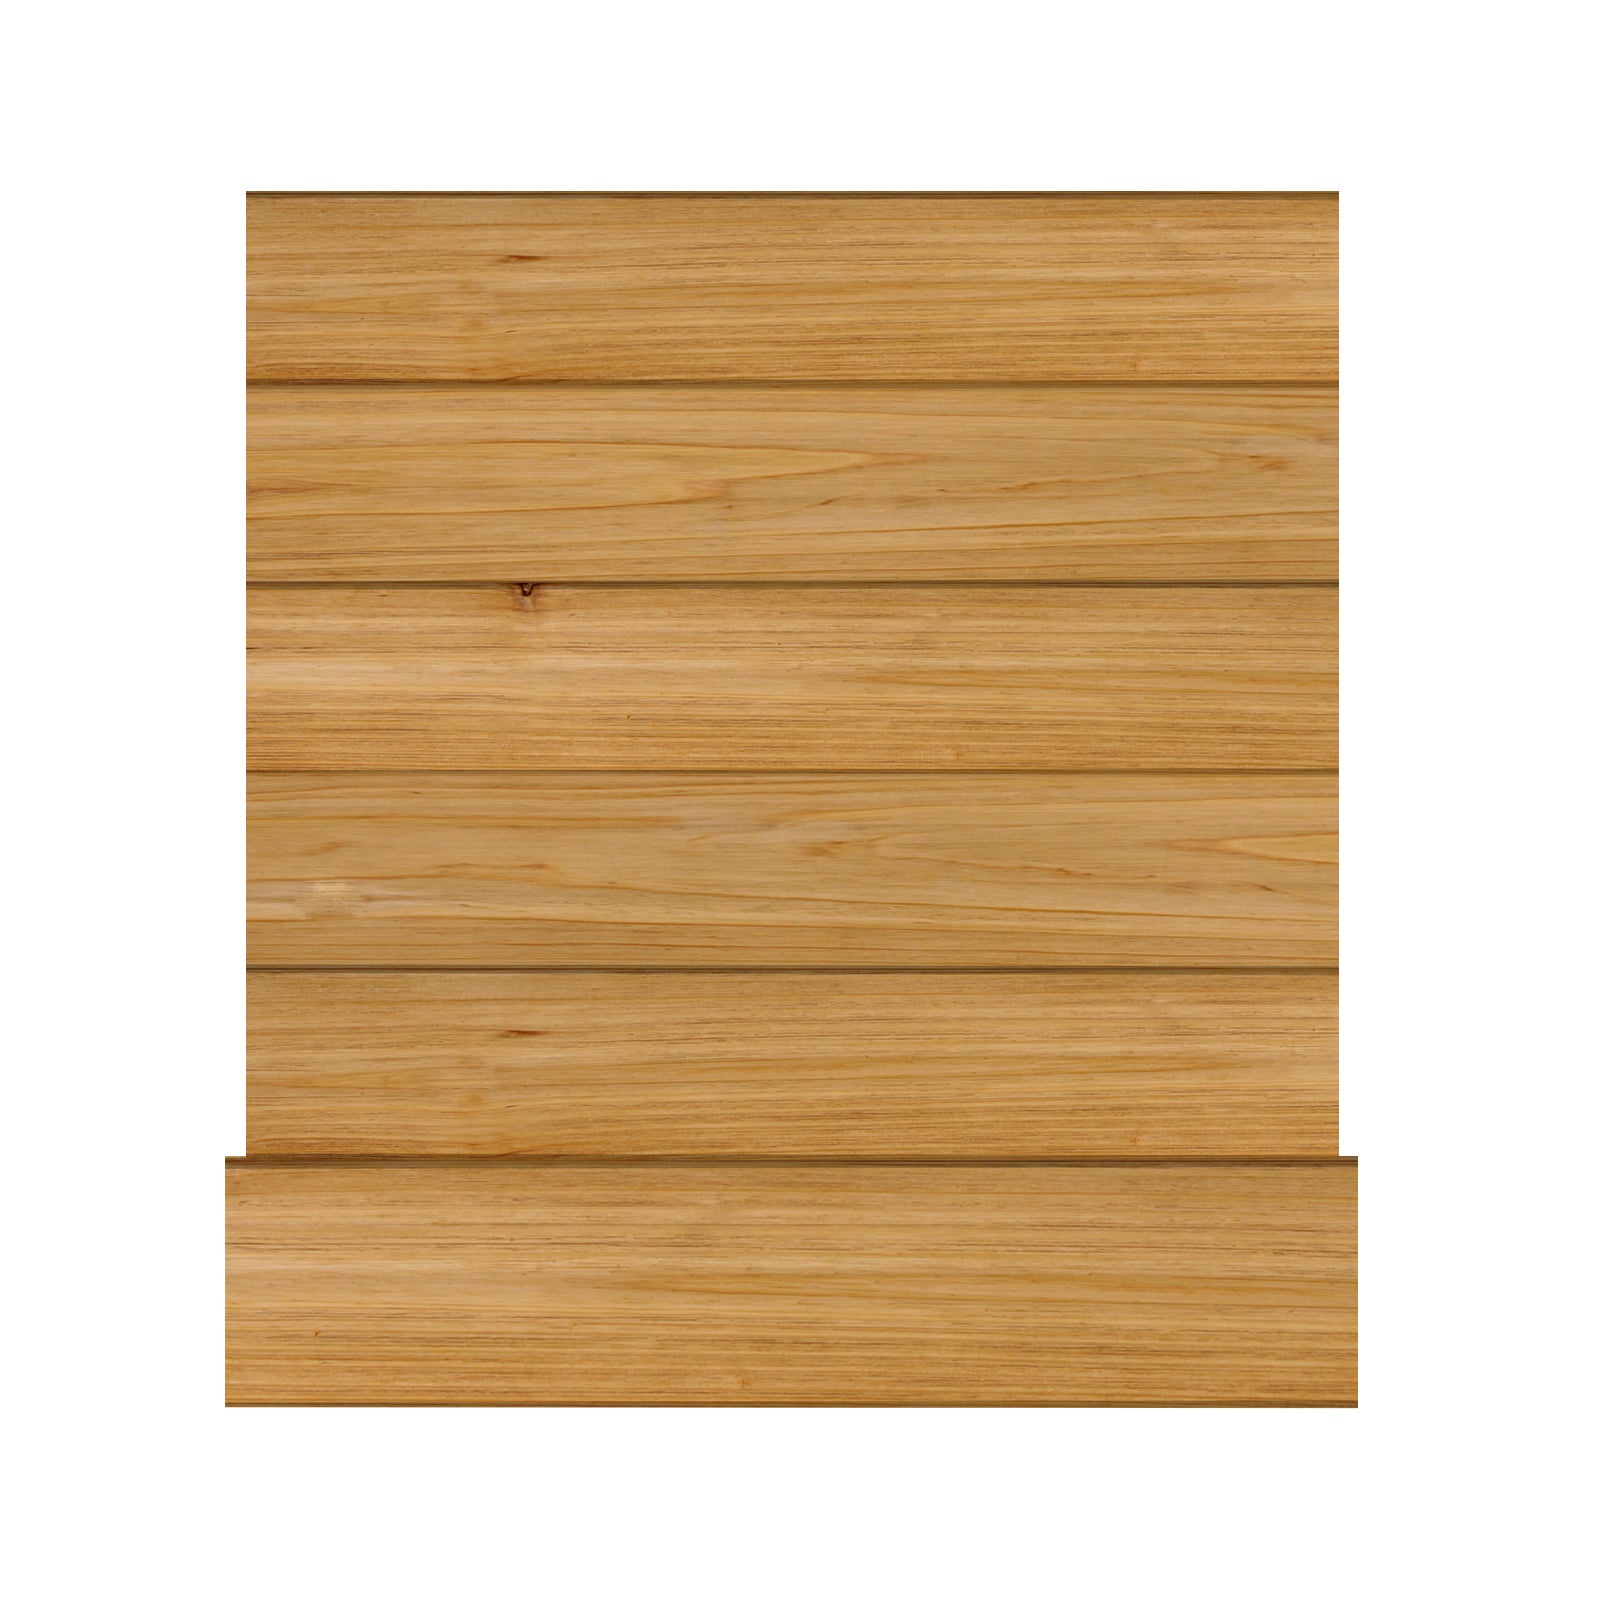 Custom Rustic Range Hood, Reclaimed Barn Wood Vent Hood with Insert Ventilator & Decorative Molding Trim, Modern B Series